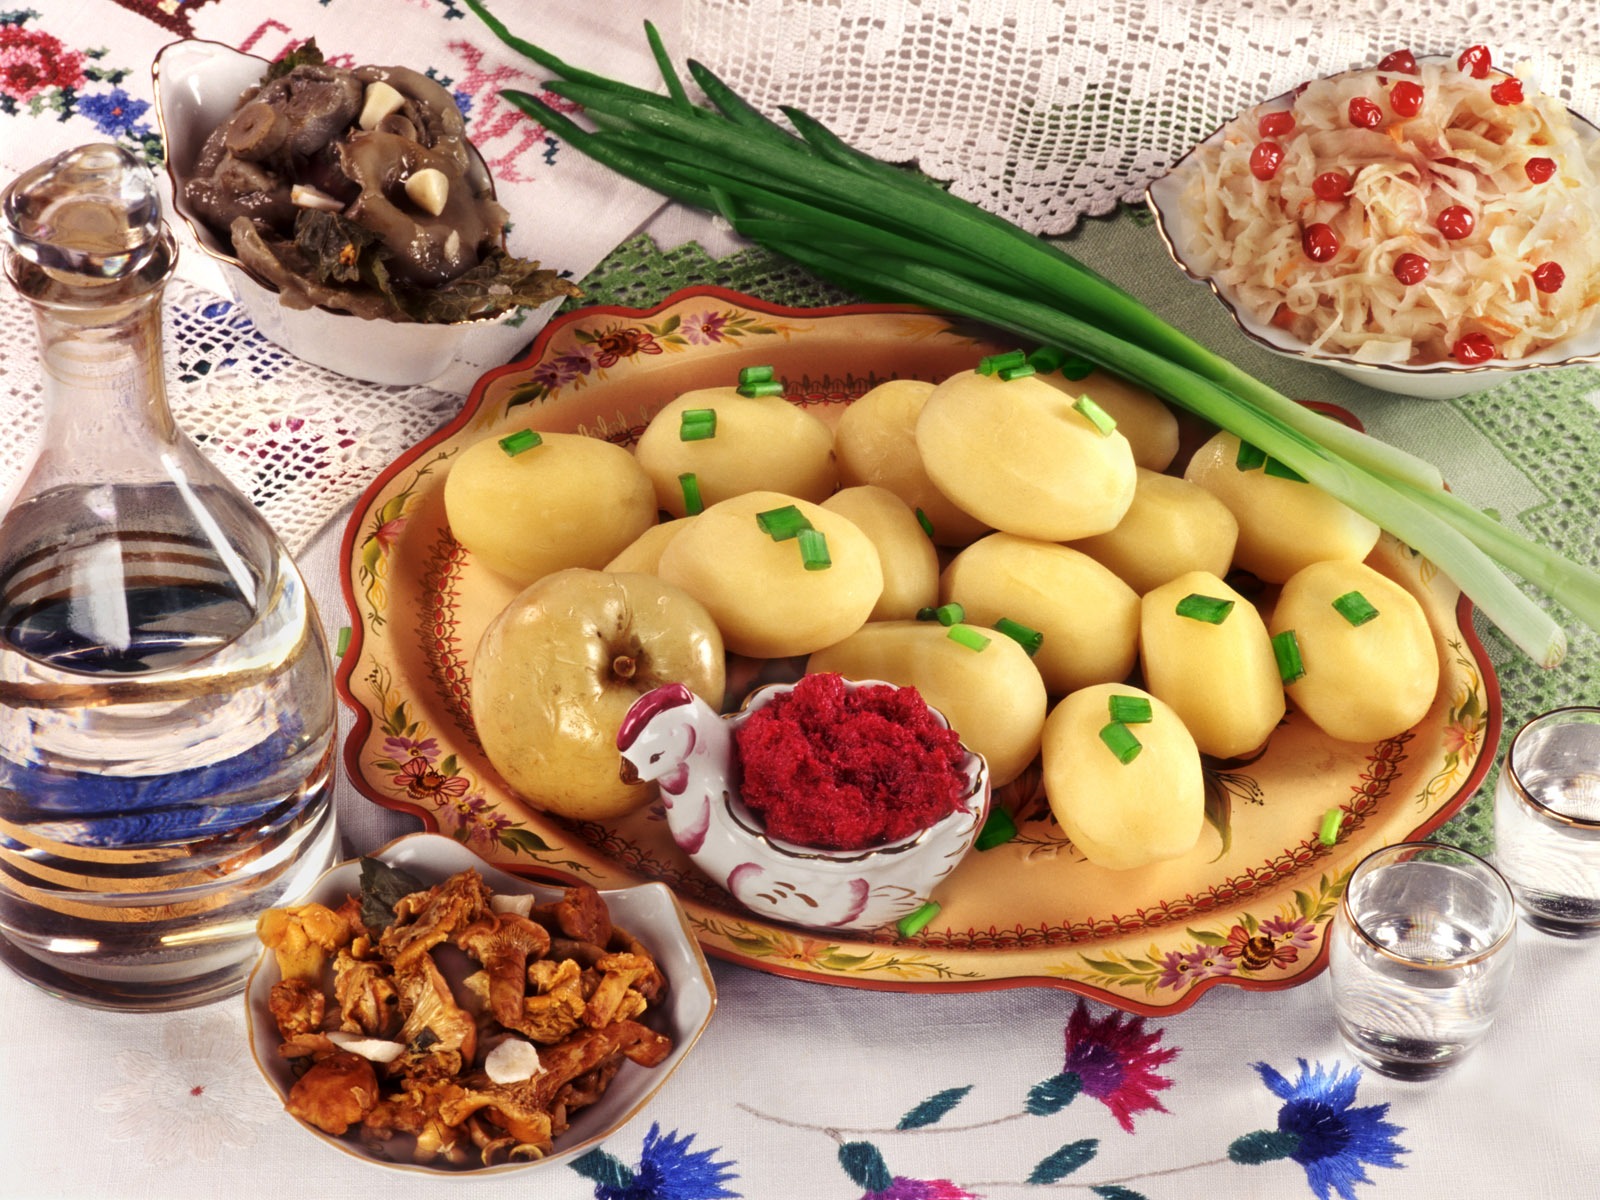 Russian type diet meal wallpaper (1) #2 - 1600x1200